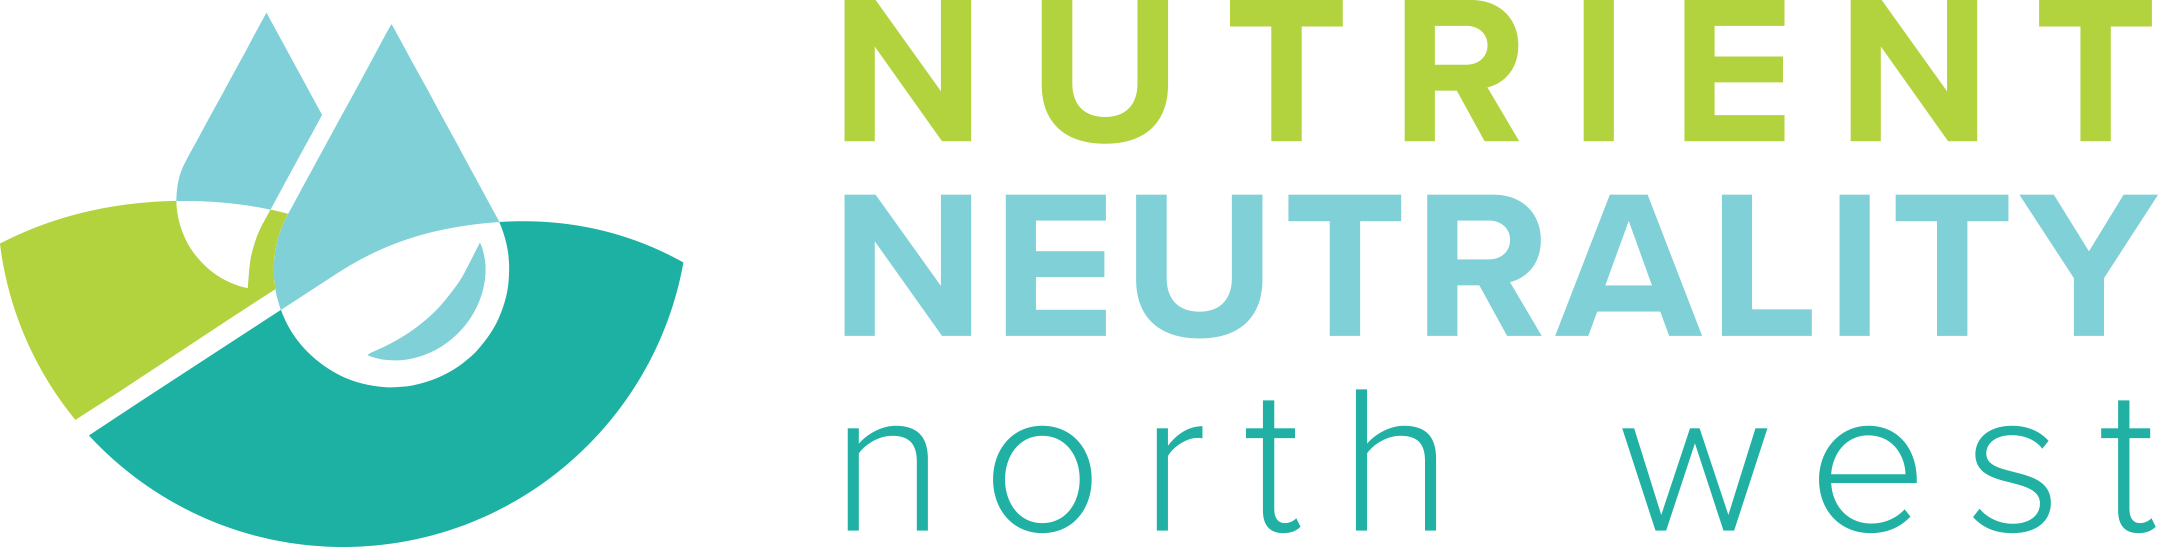 Nutrient Neutrality Partner logo